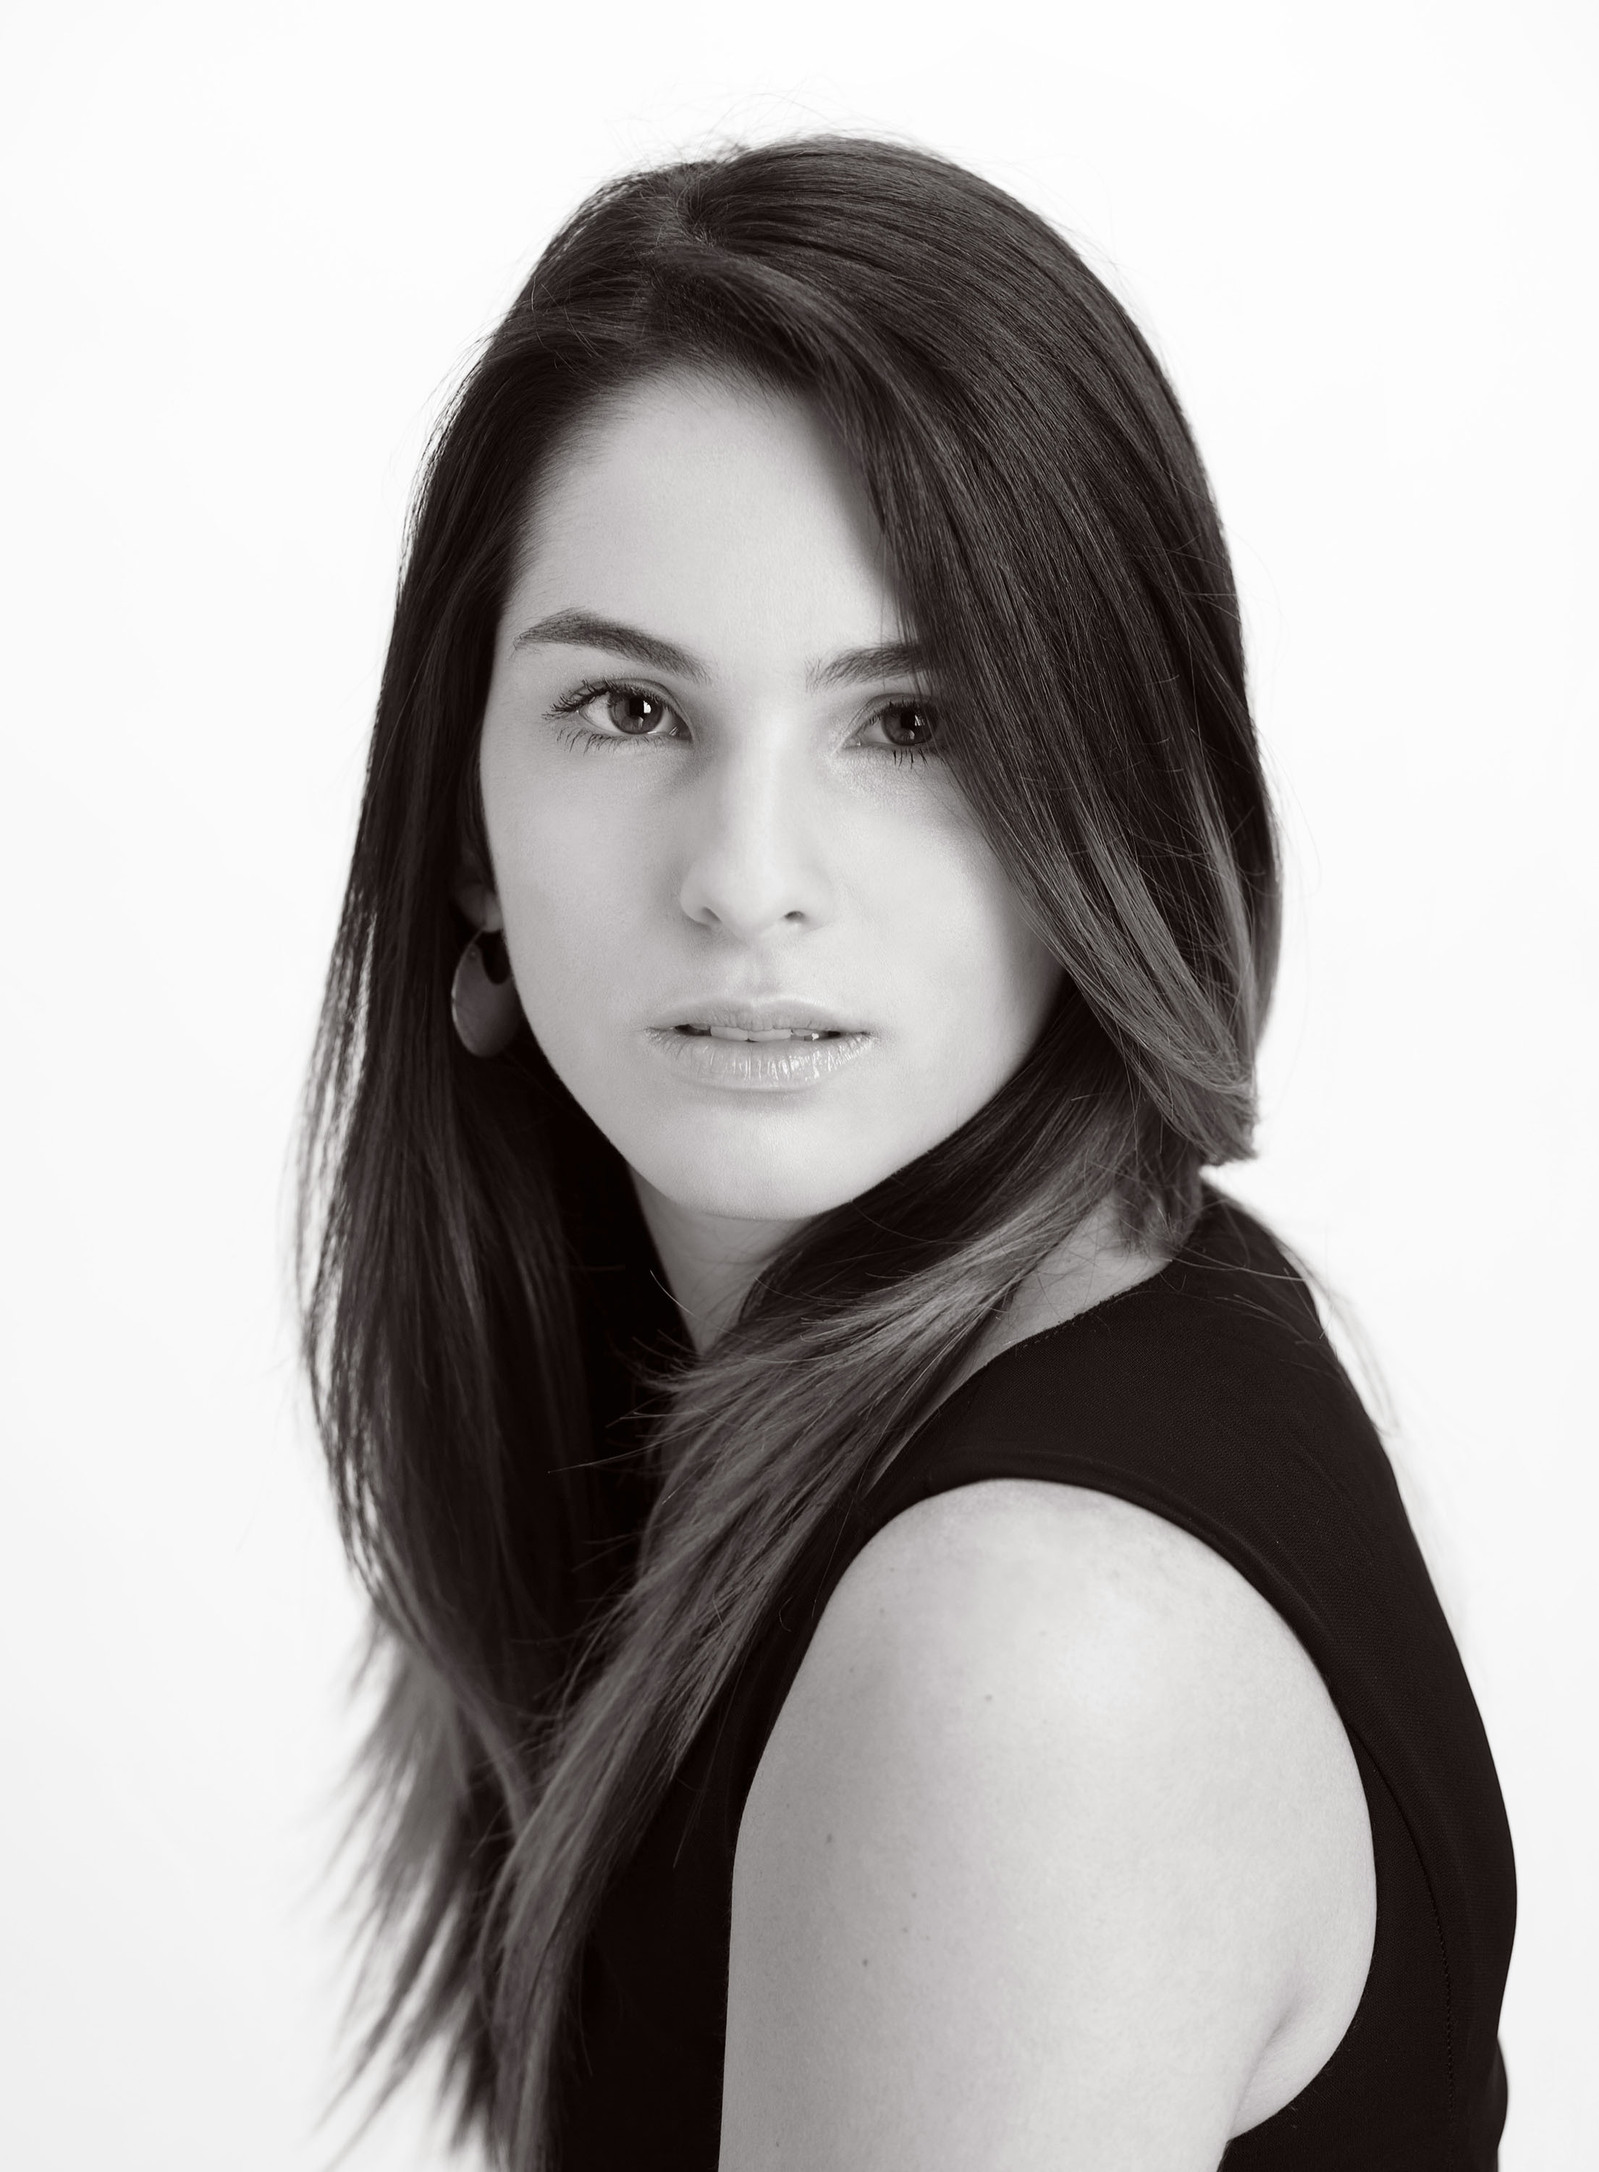 Female Actor Casting Headshots Dublin Professional Portrait Photography Studio white background